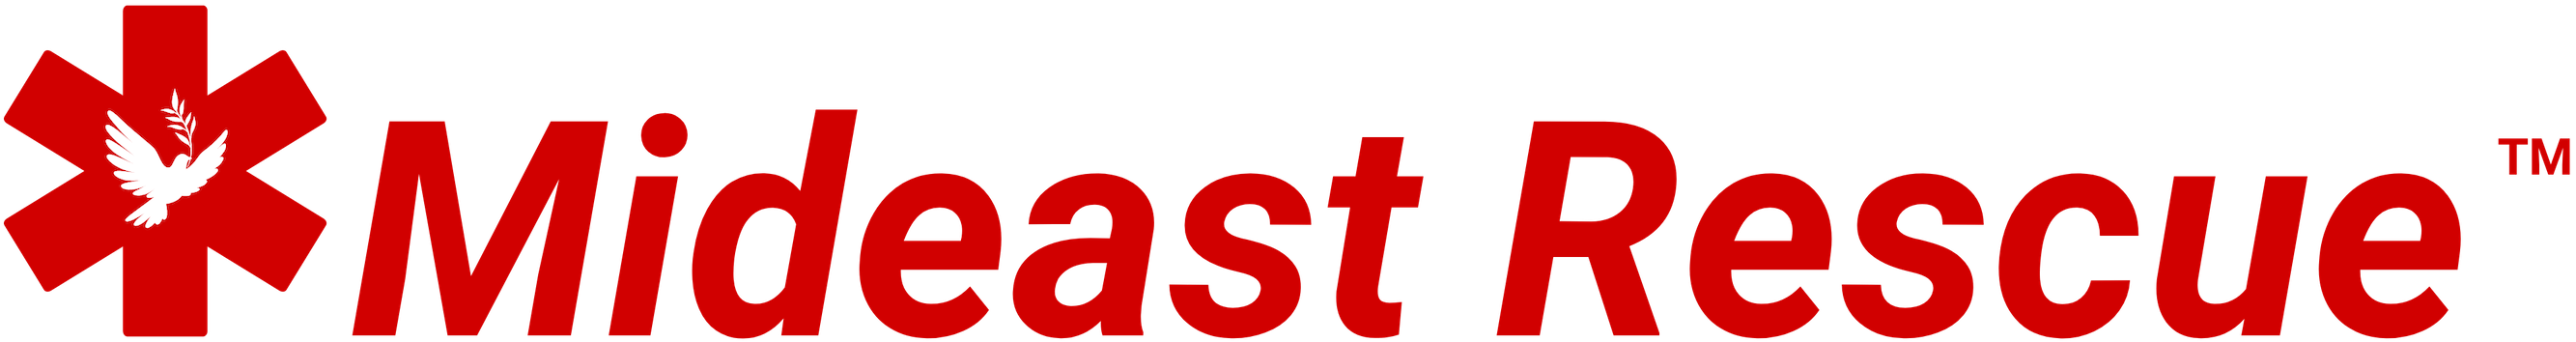 Mideast Rescue logo